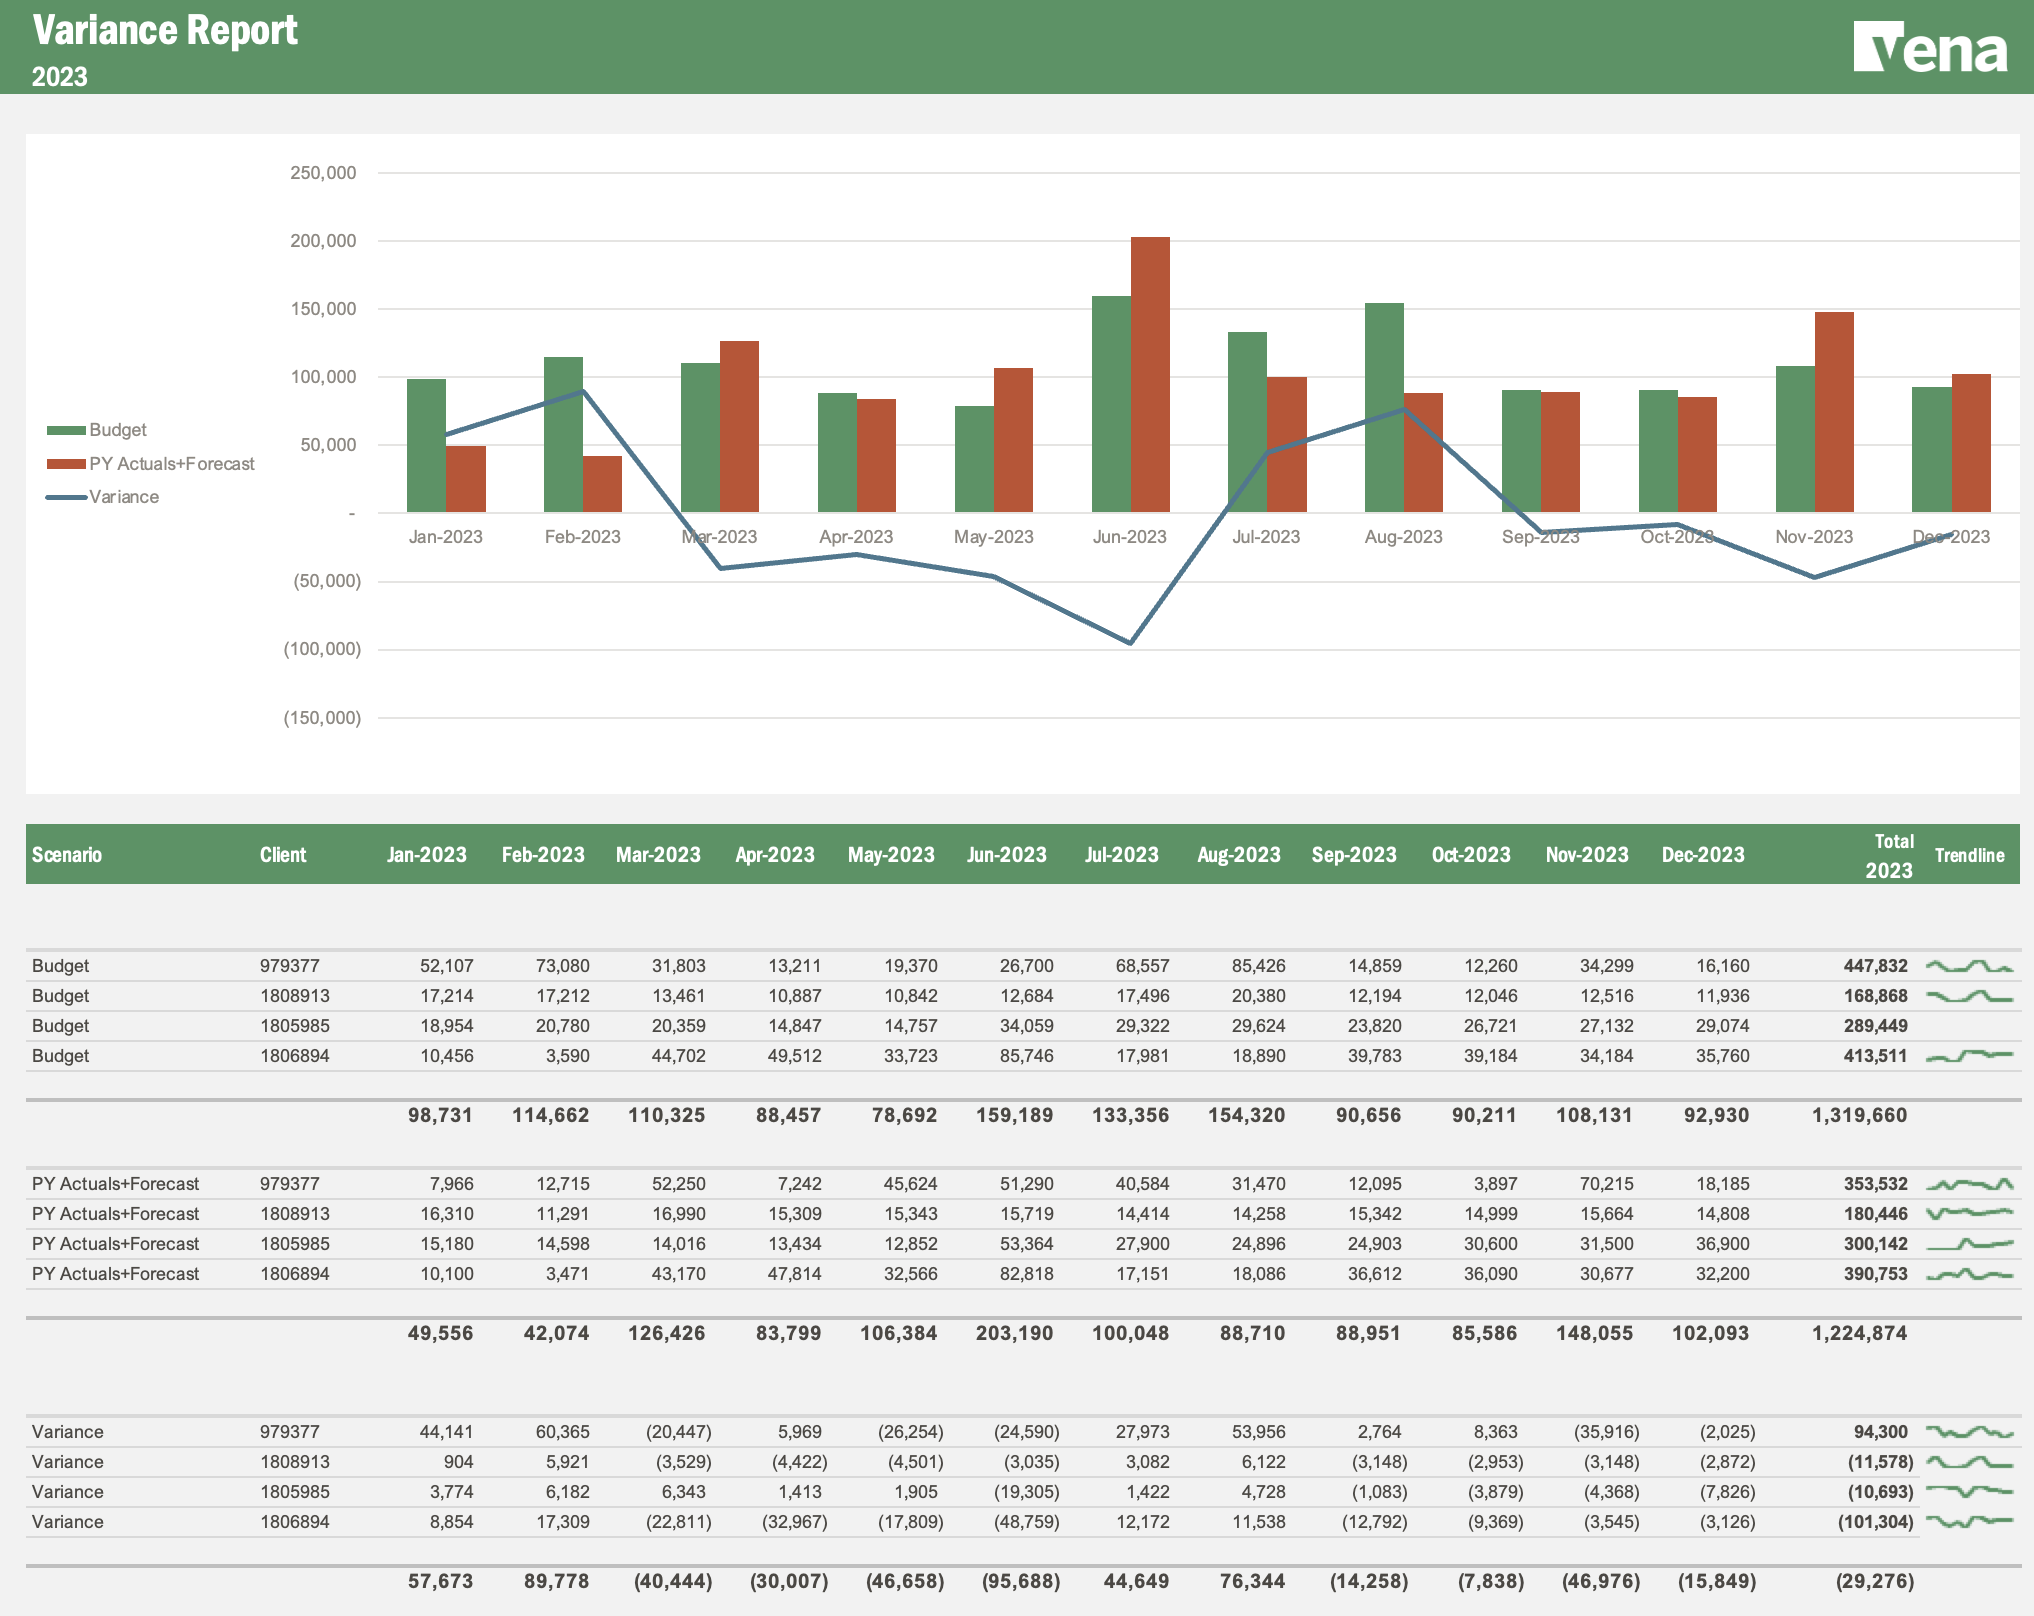 Screenshot of Vena's variance report dashboard